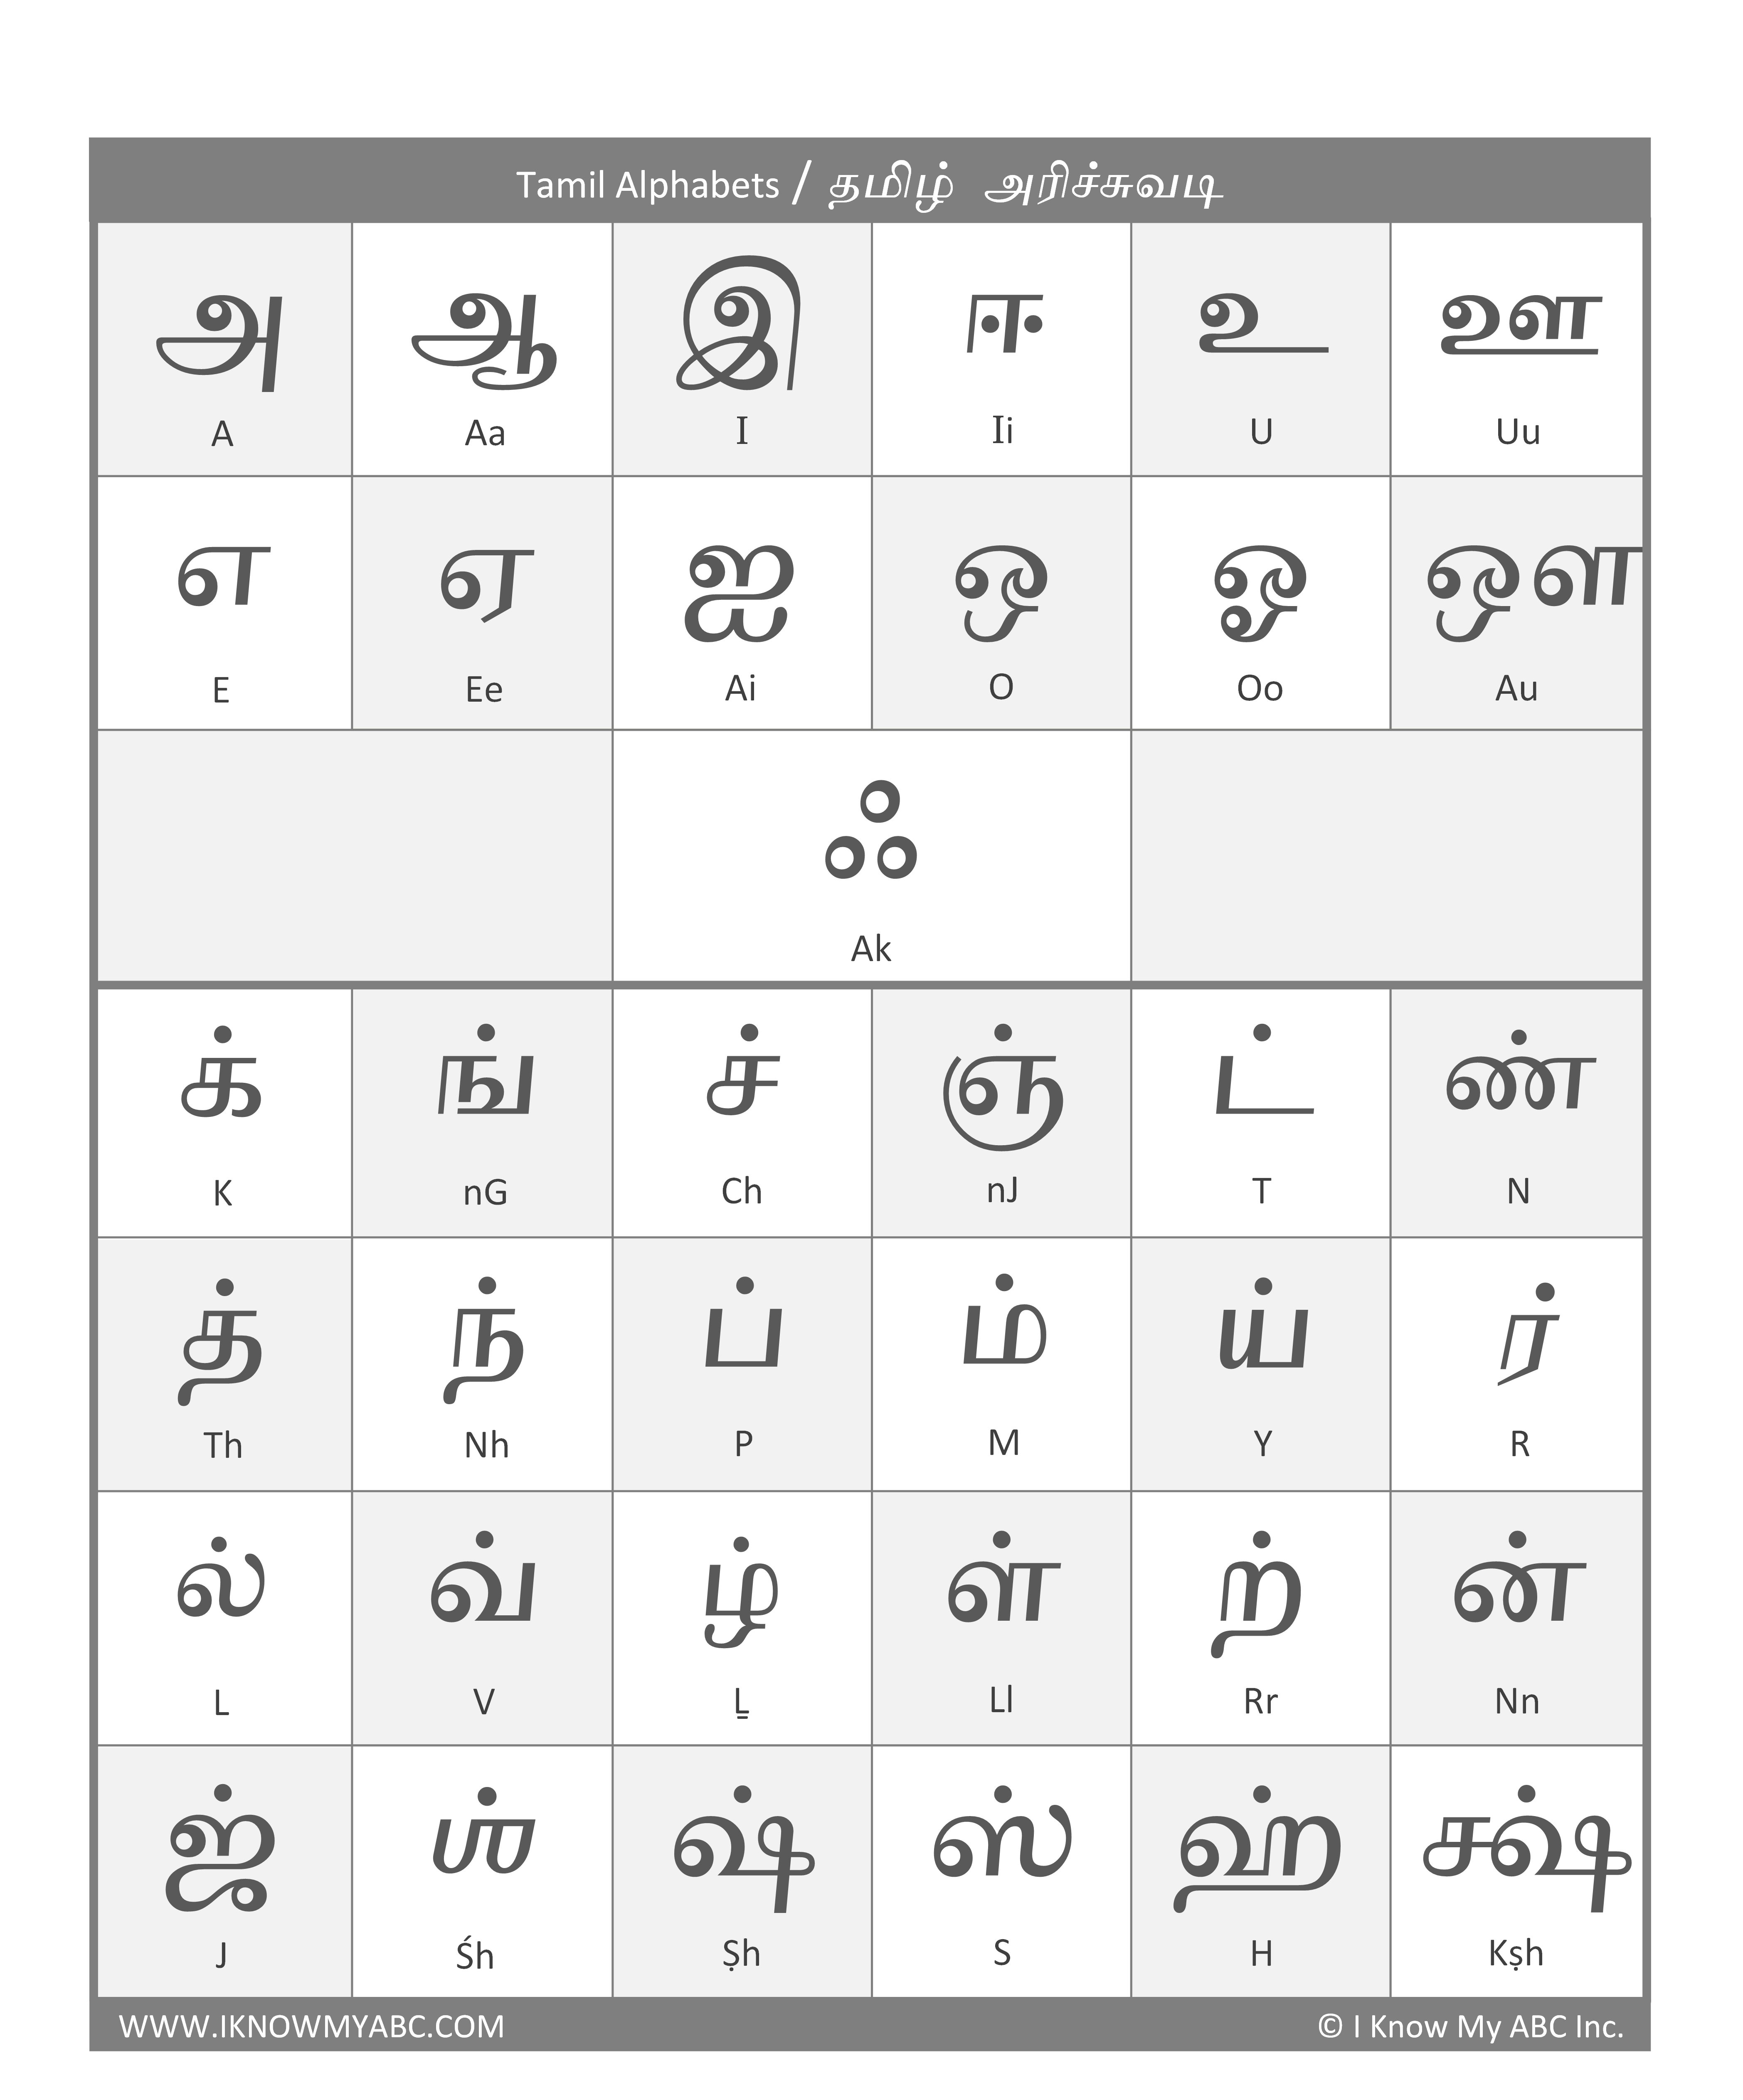 malayalam-alphabets-to-tamil-photos-alphabet-collections